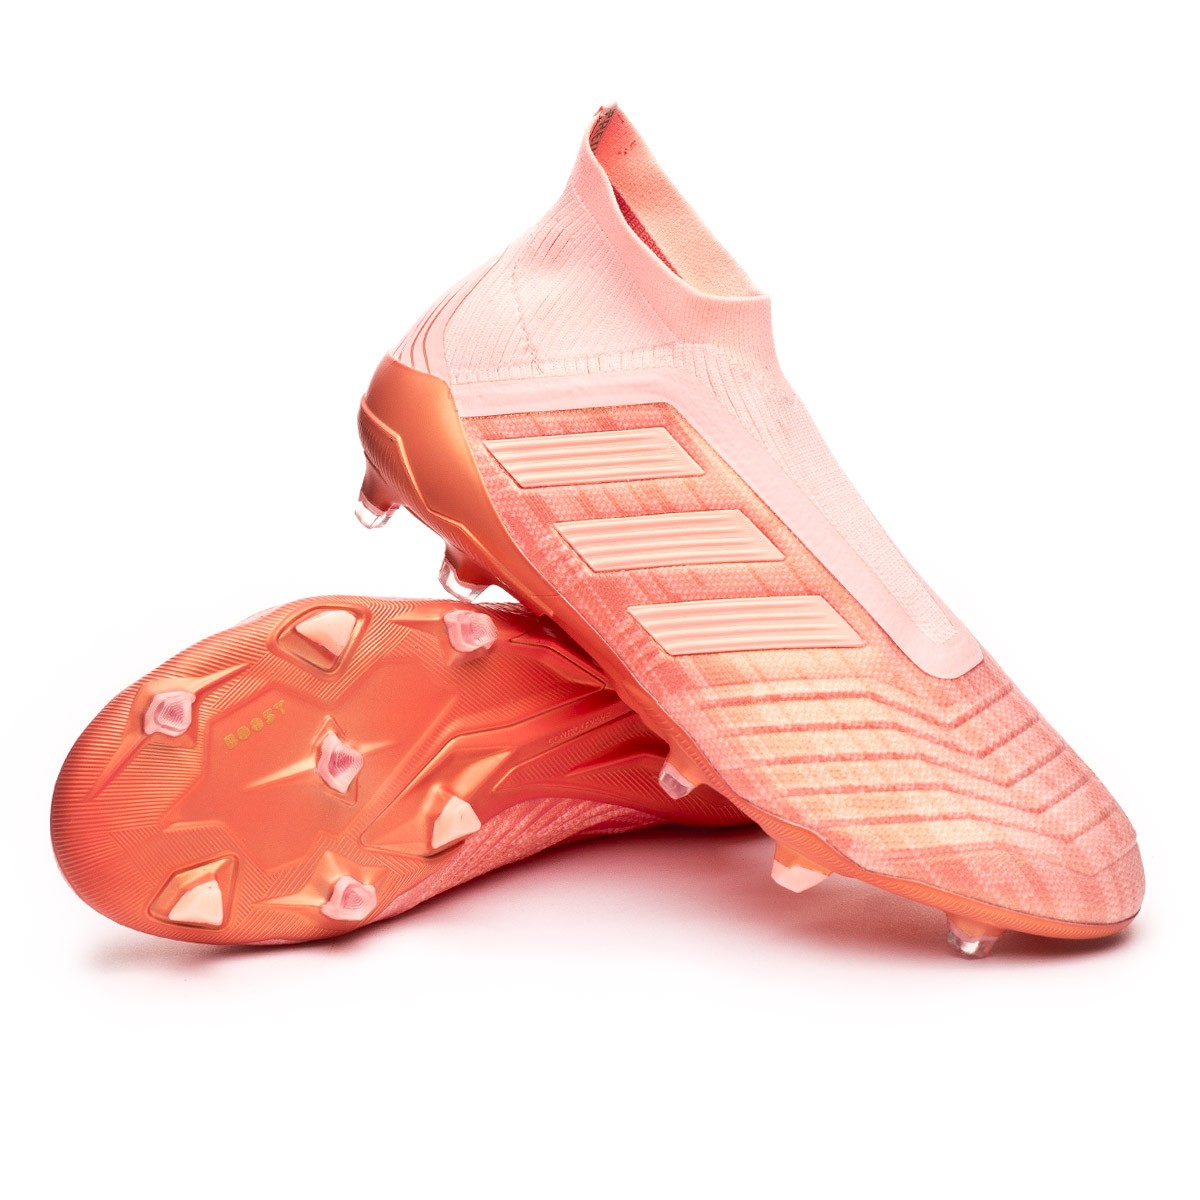 adidas predator laceless football boots